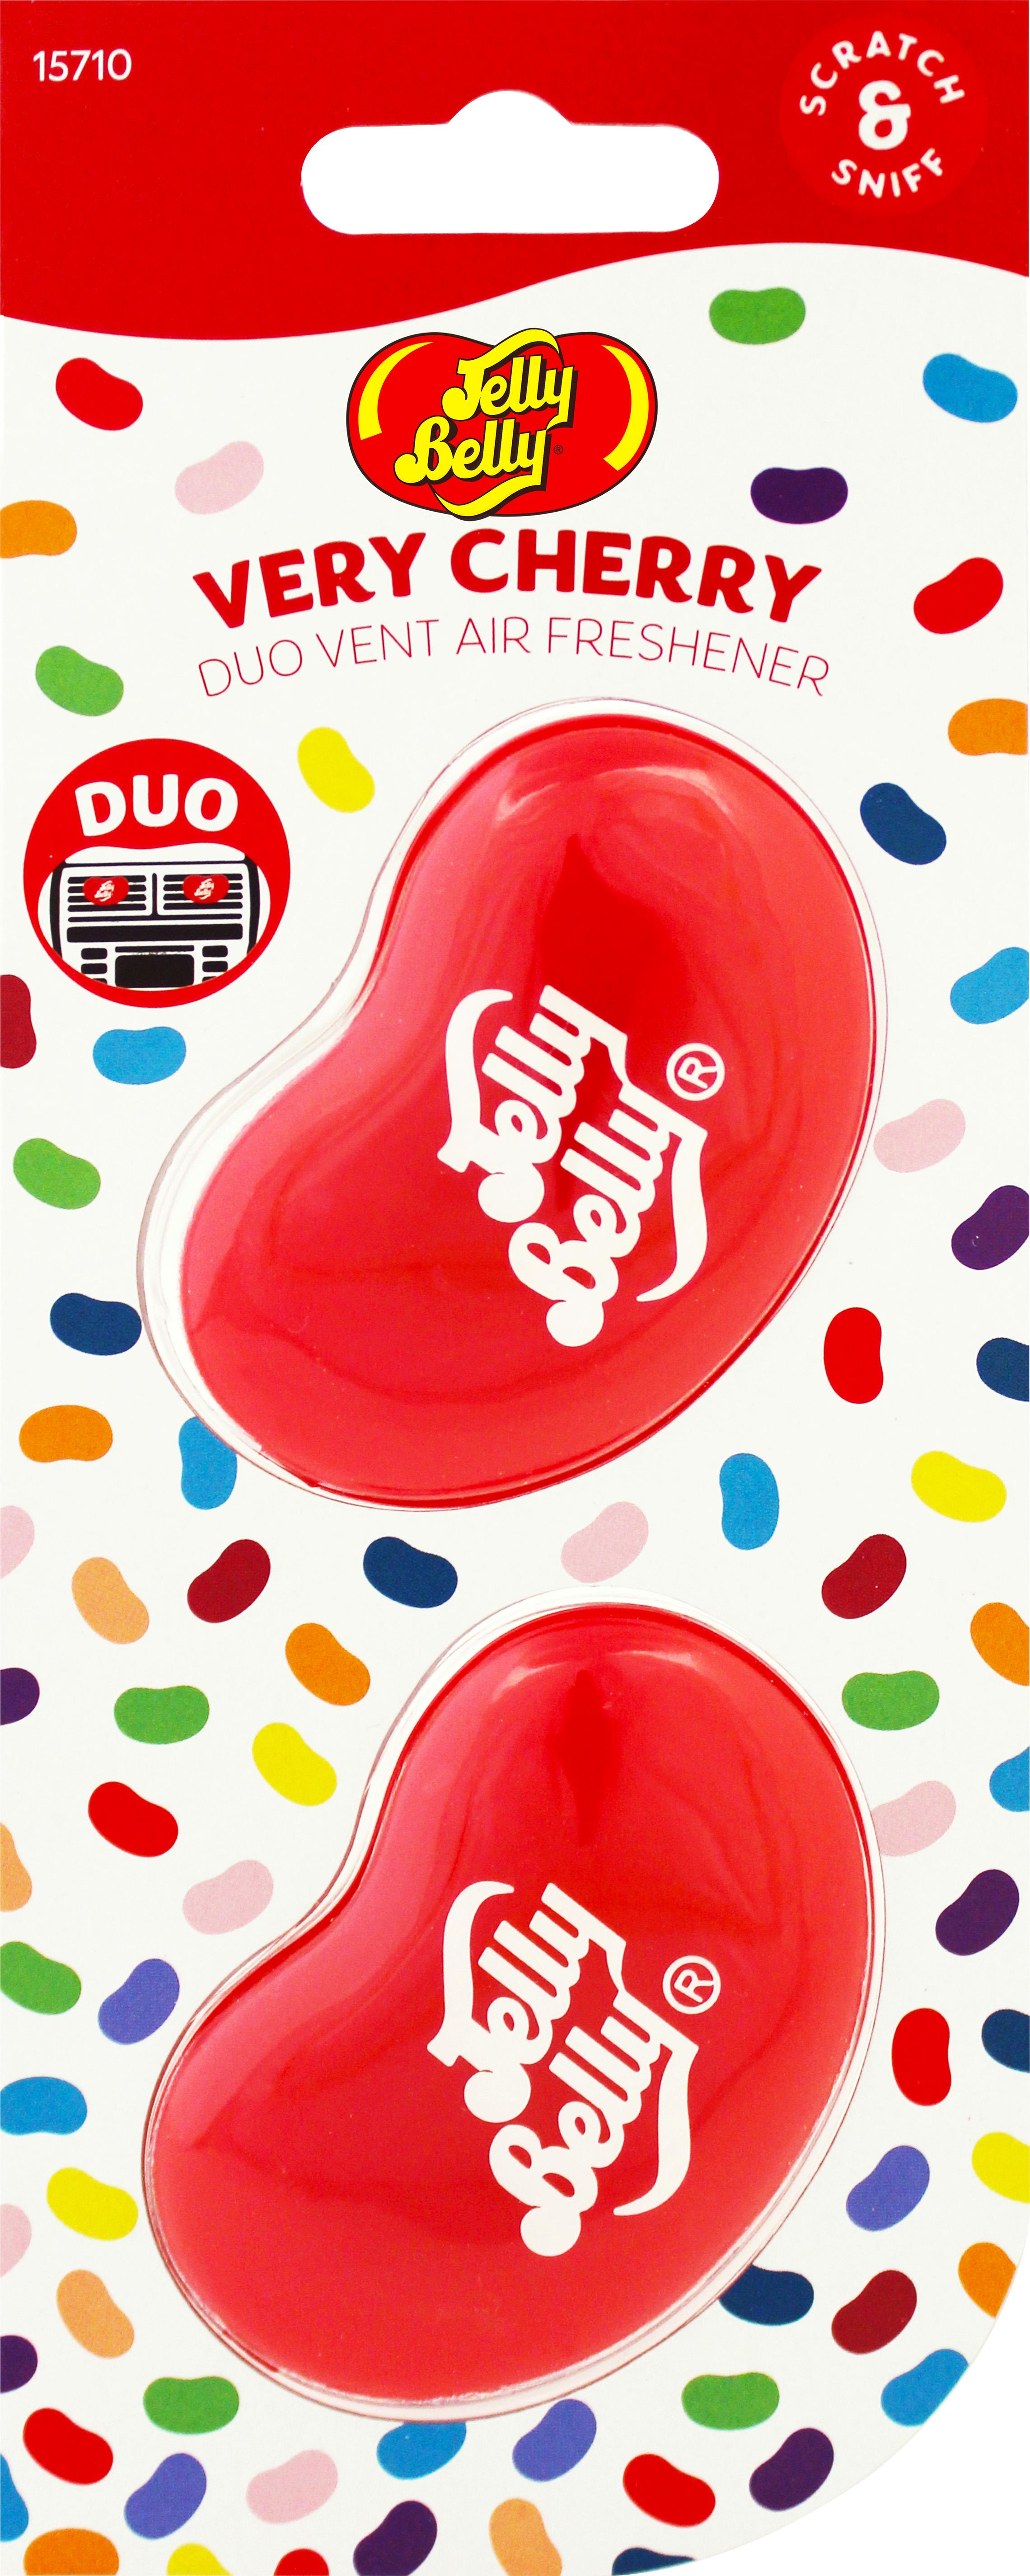 Jelly Belly Duo Mini Air Freshener - Very Cherry